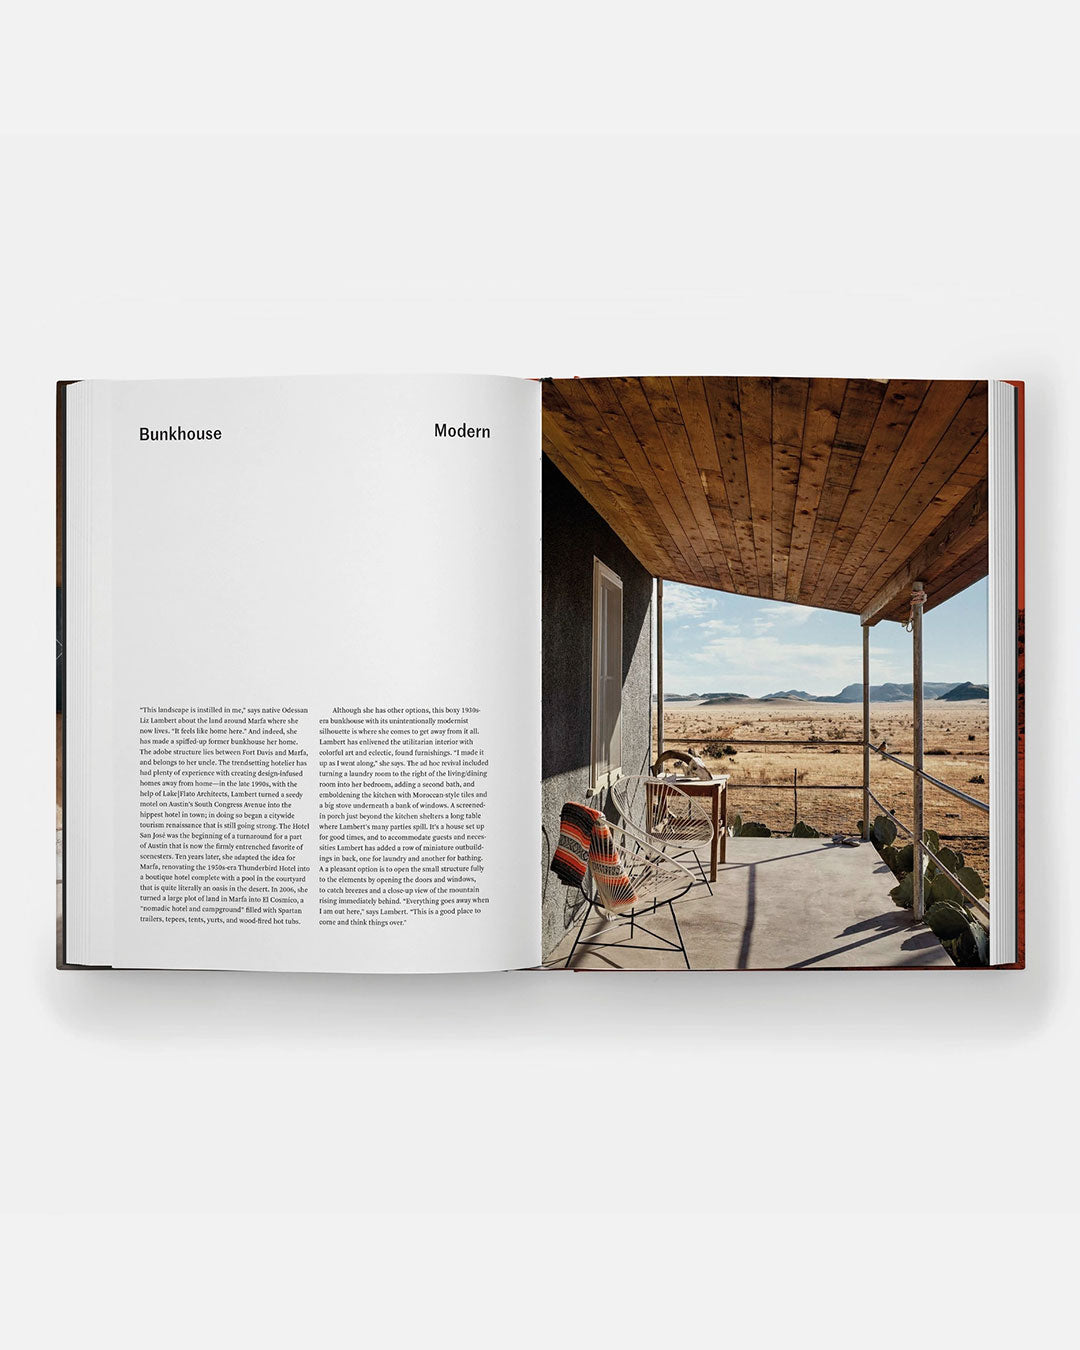 Marfa Modern: Artistic Interiors of the West Texas High Desert by Helen Thompson